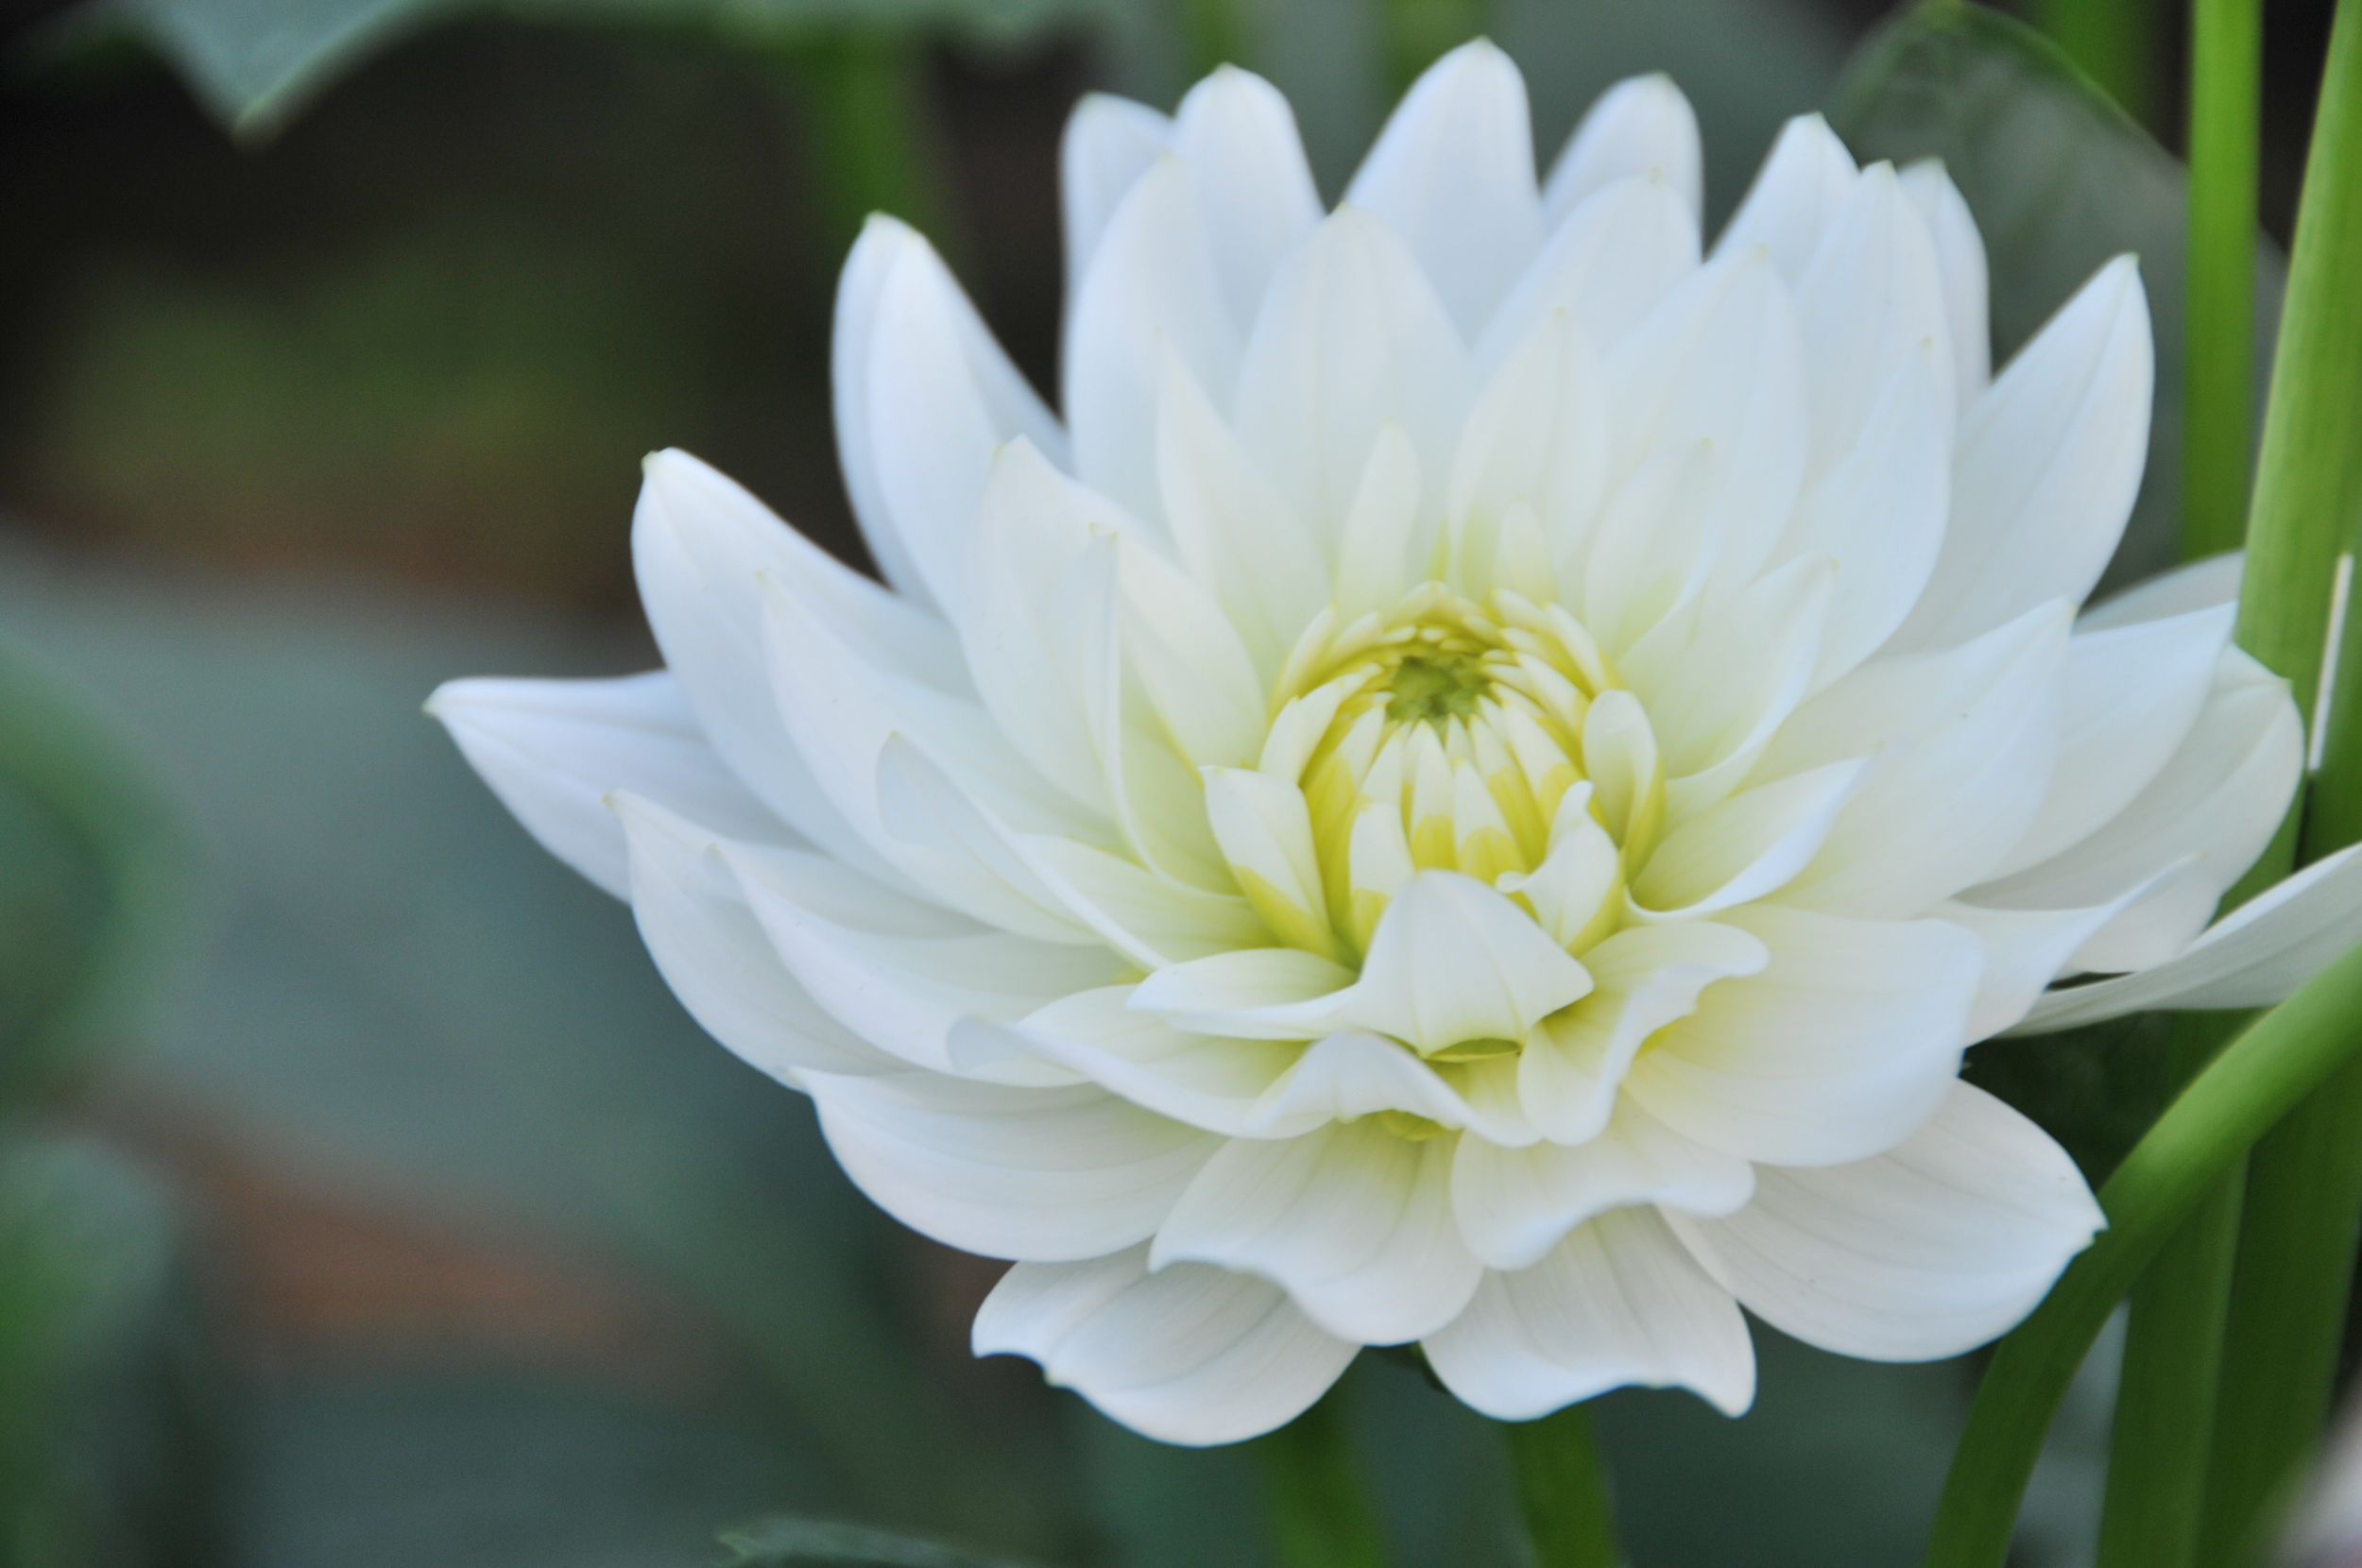  white dahlia flower 